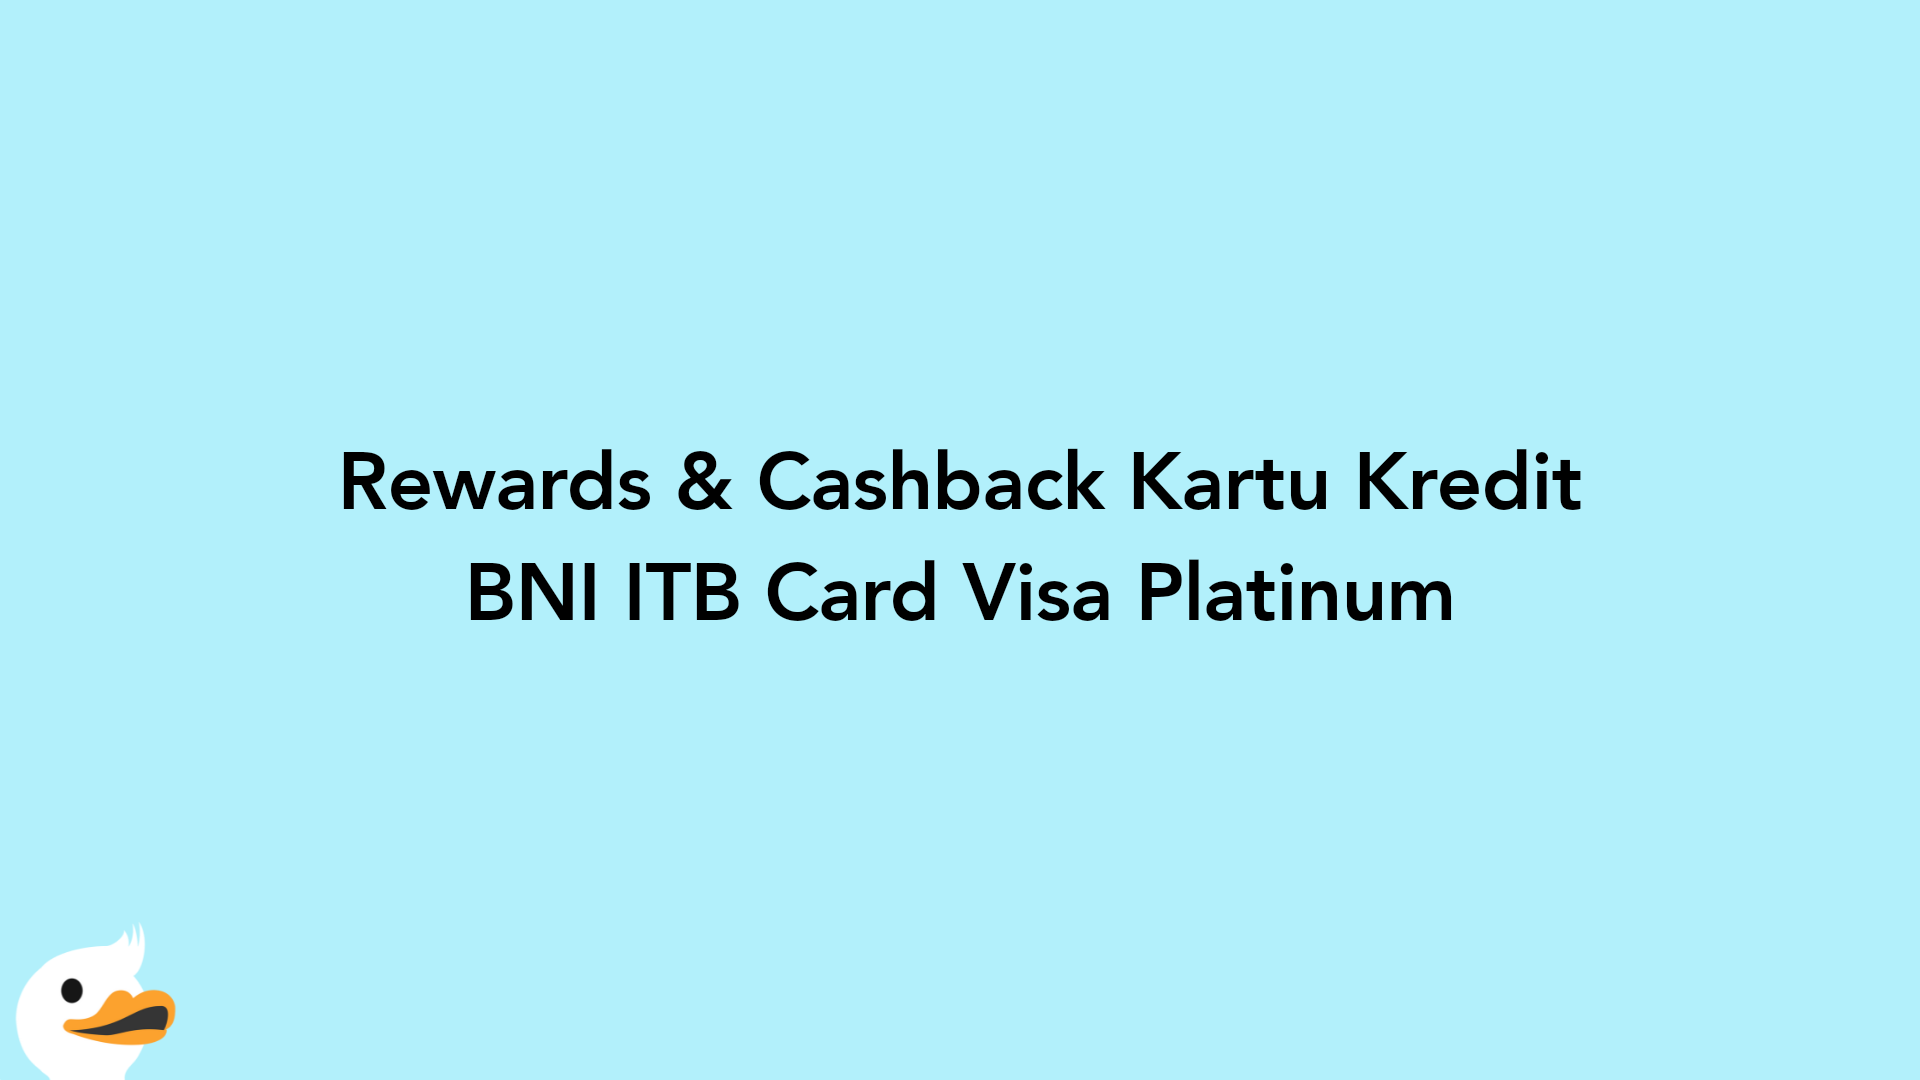 Rewards & Cashback Kartu Kredit BNI ITB Card Visa Platinum